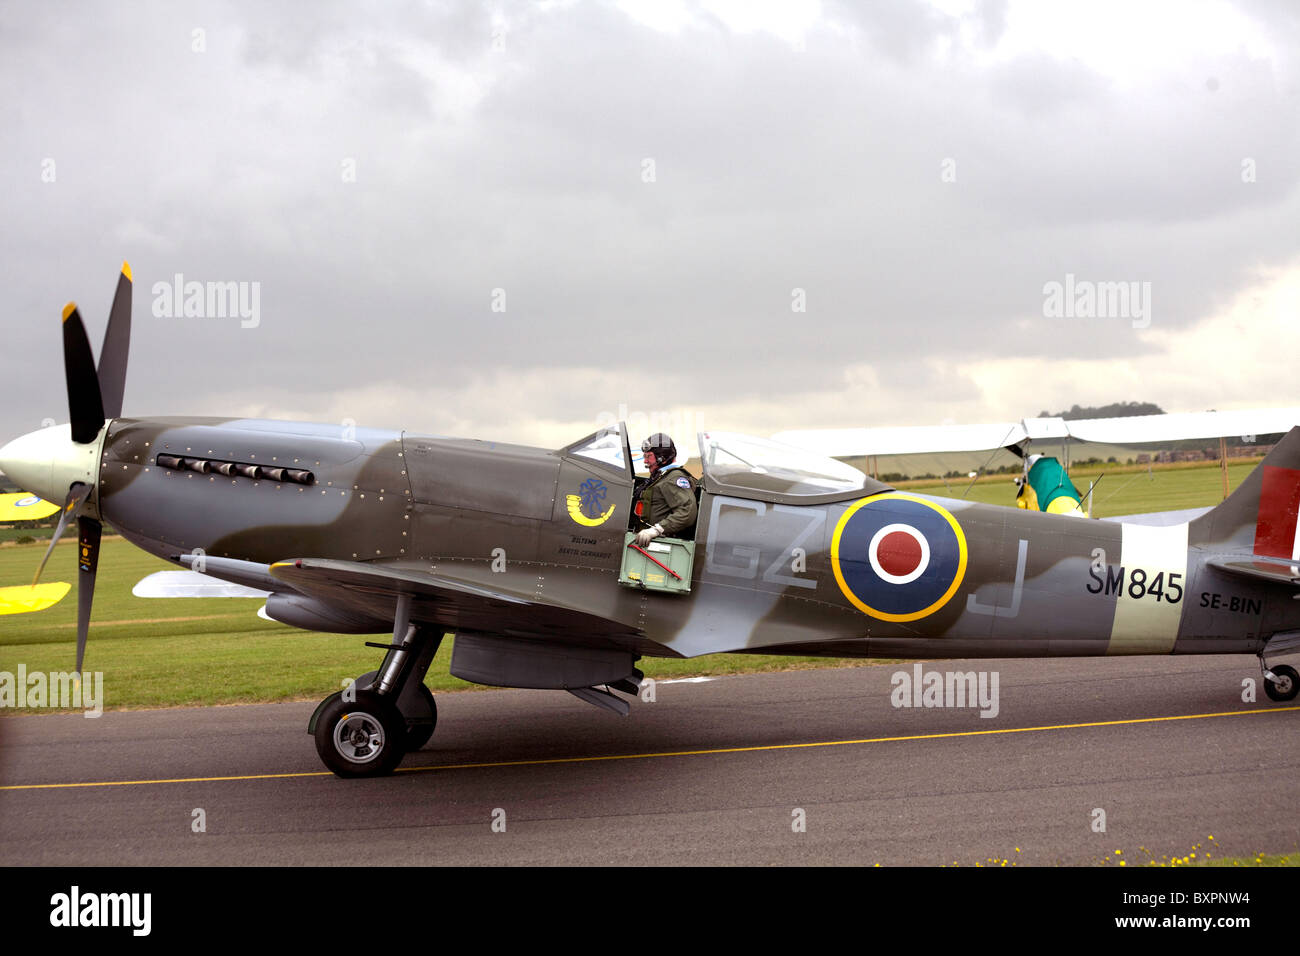 Supermarine Spitfire, SM845 at the Duxford Airshow, Herts, UK Stock Photo